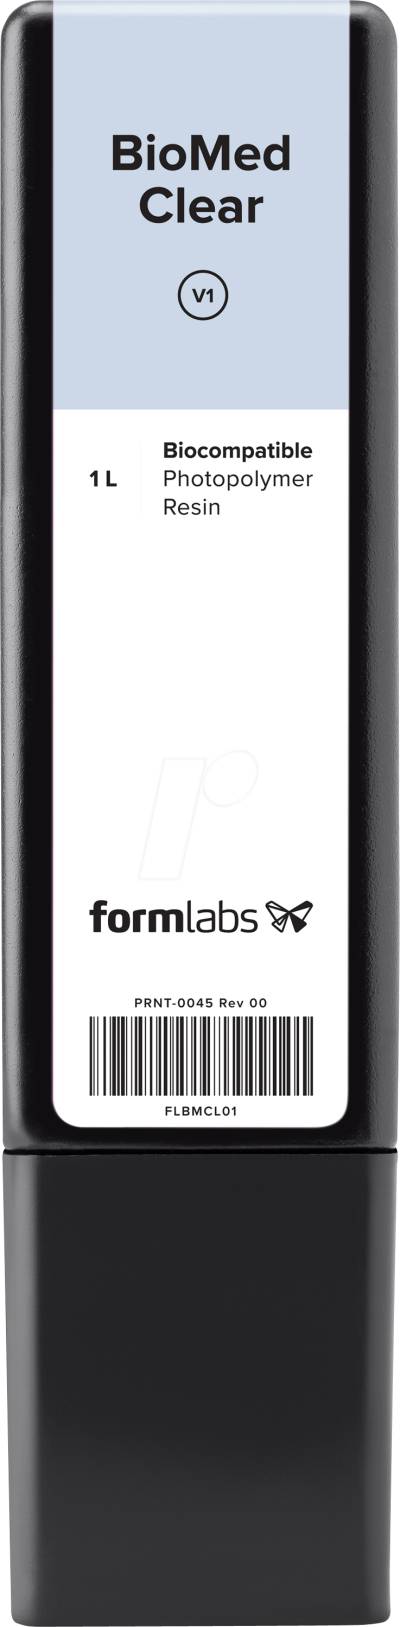 FORM KH BC 1L F2 - 3D Druck, Kunstharz, BioMed klar, 1l, für Form 3/3B von FORMLABS